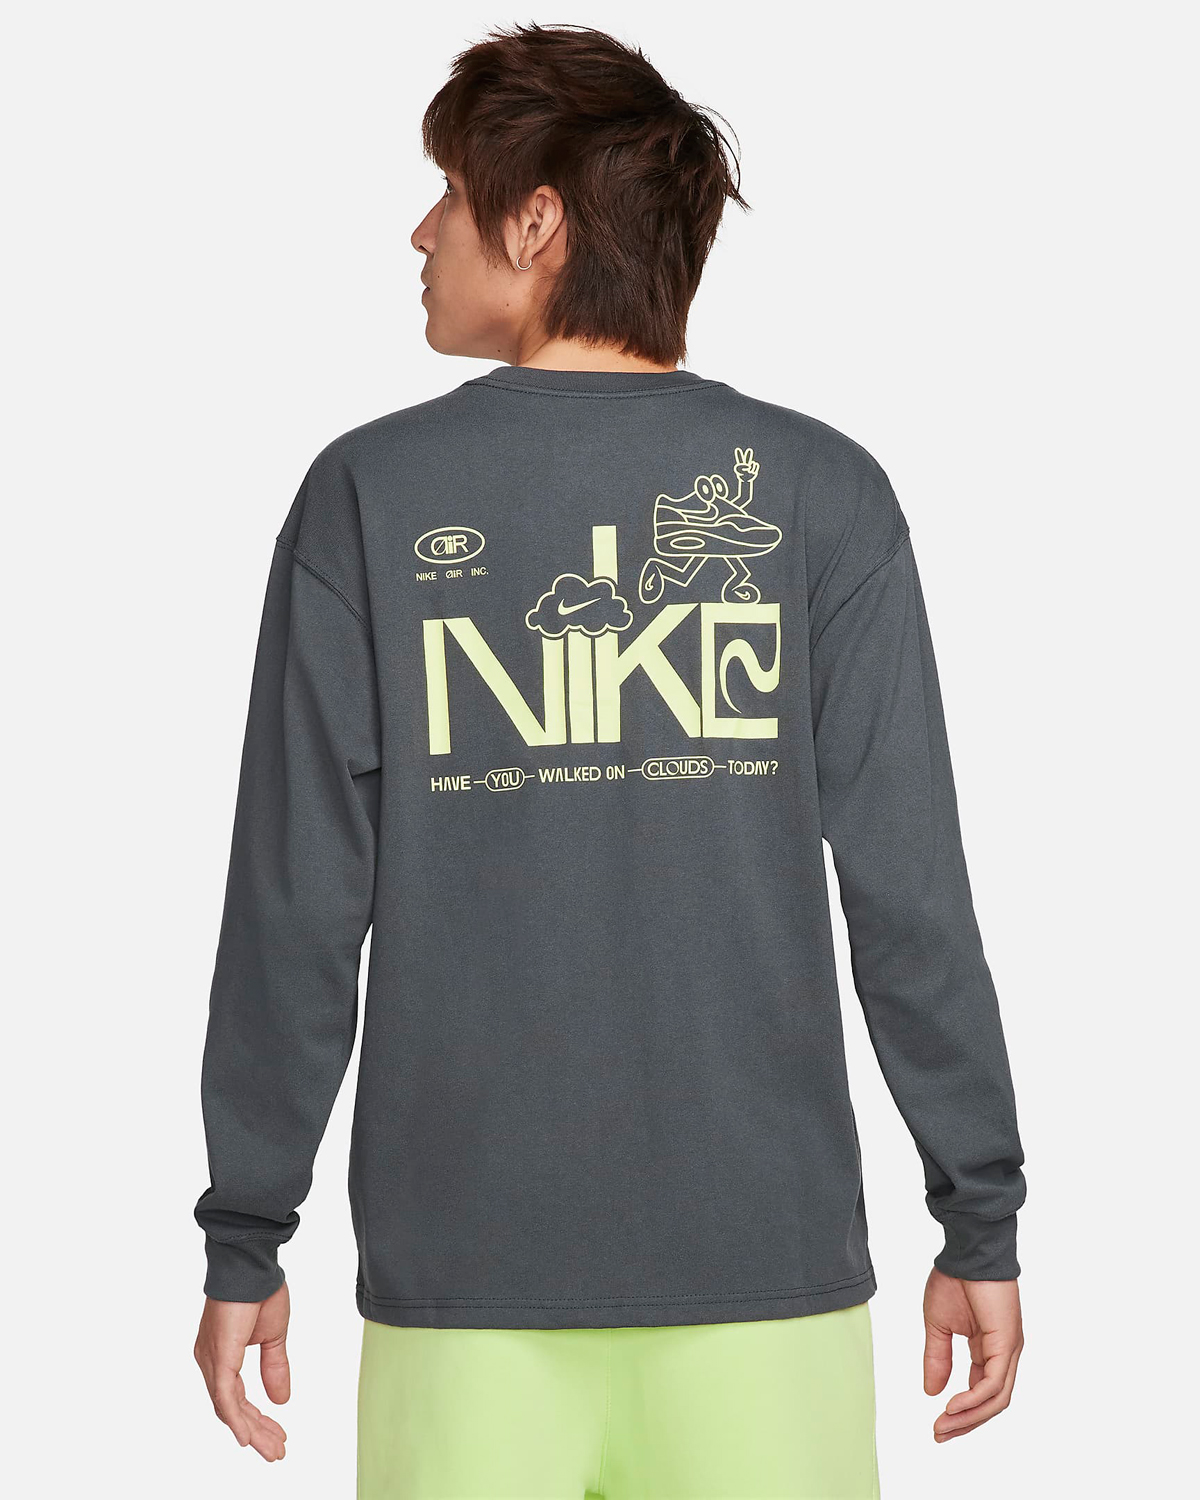 Nike-Sportswear-Air-Long-Sleeve-T-Shirt-Anthracite-2